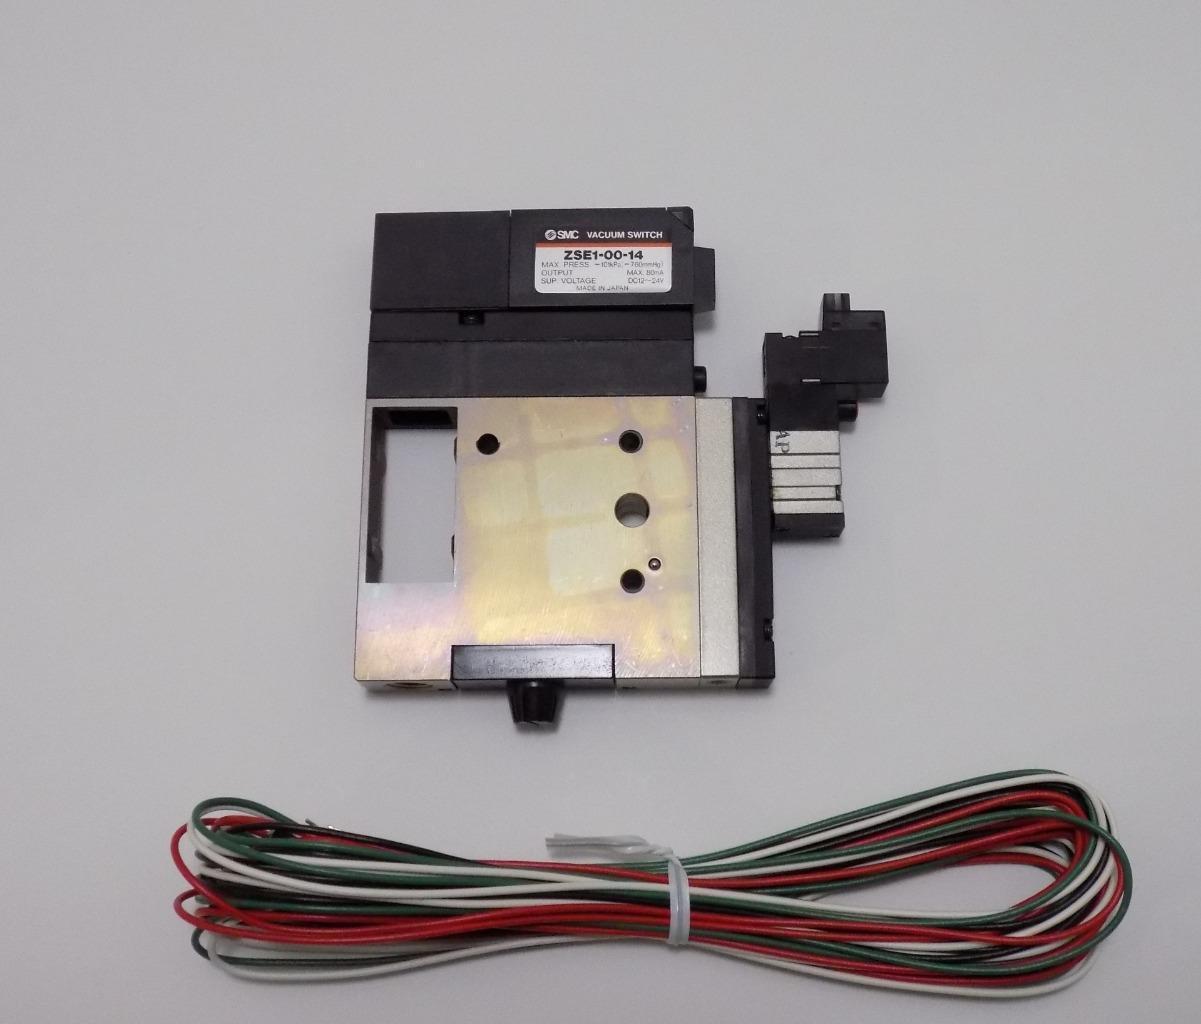 SMC ZSE1-00-14 Vacuum Switch and 50 similar items